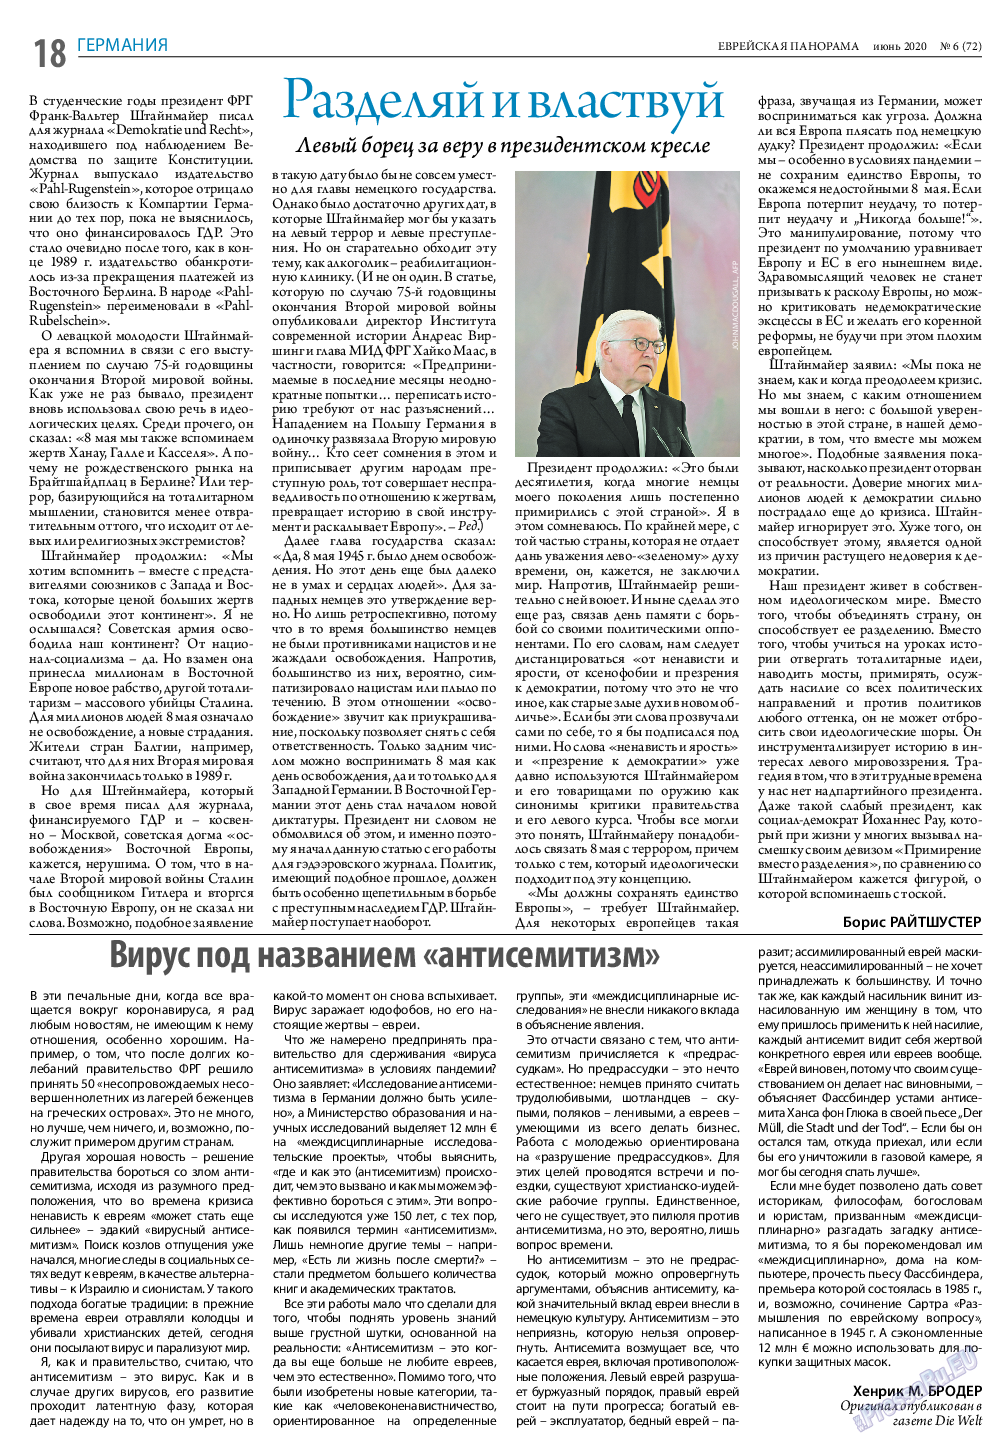 Еврейская панорама, газета. 2020 №6 стр.18